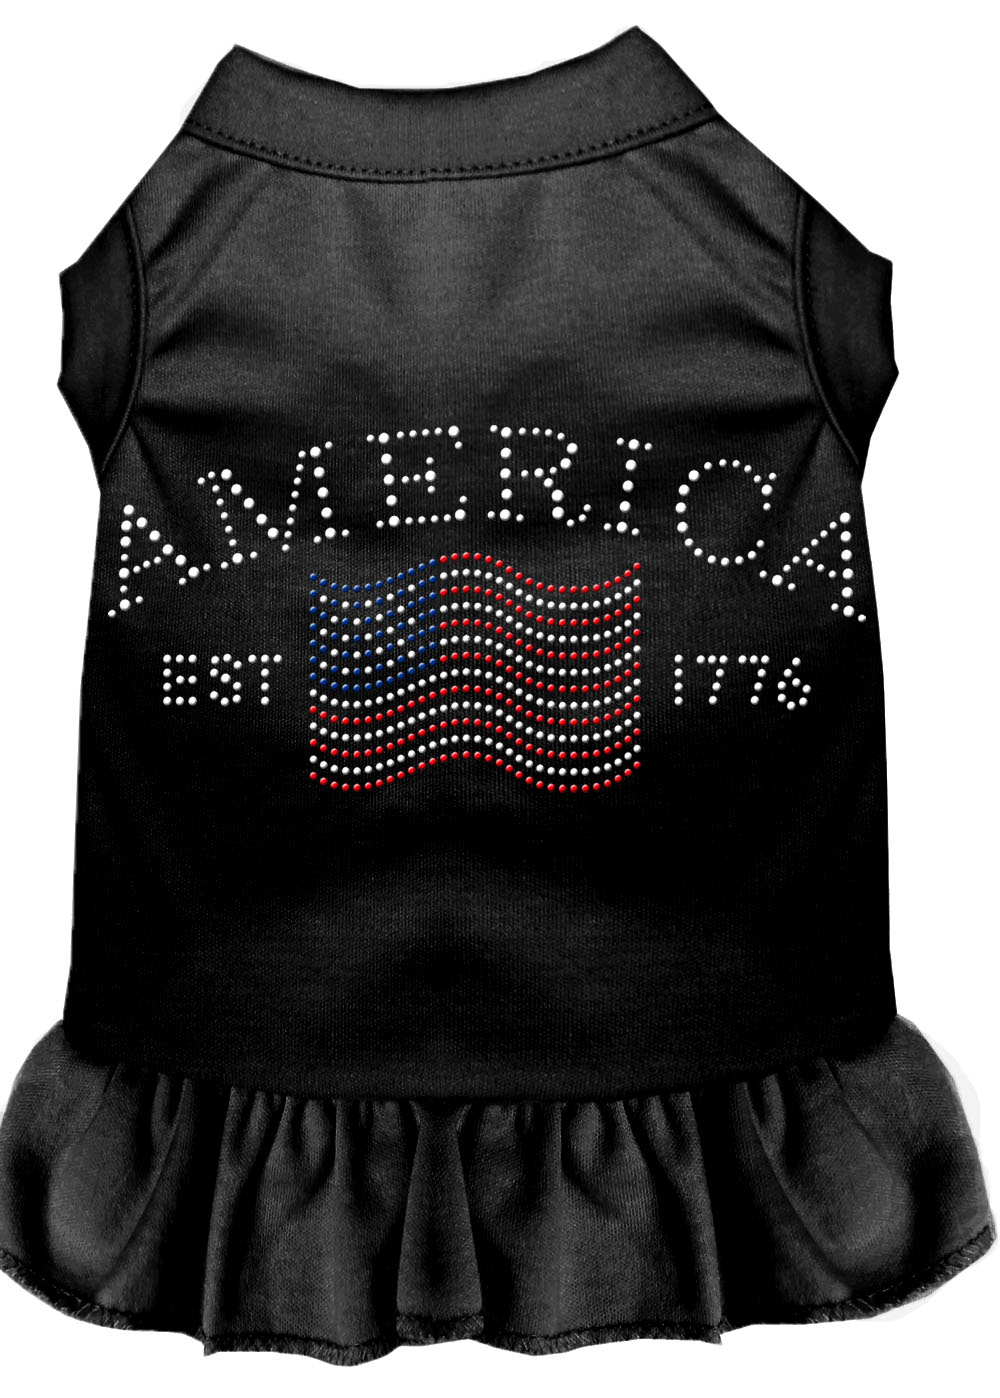 Classic America Rhinestone Dress Black XL